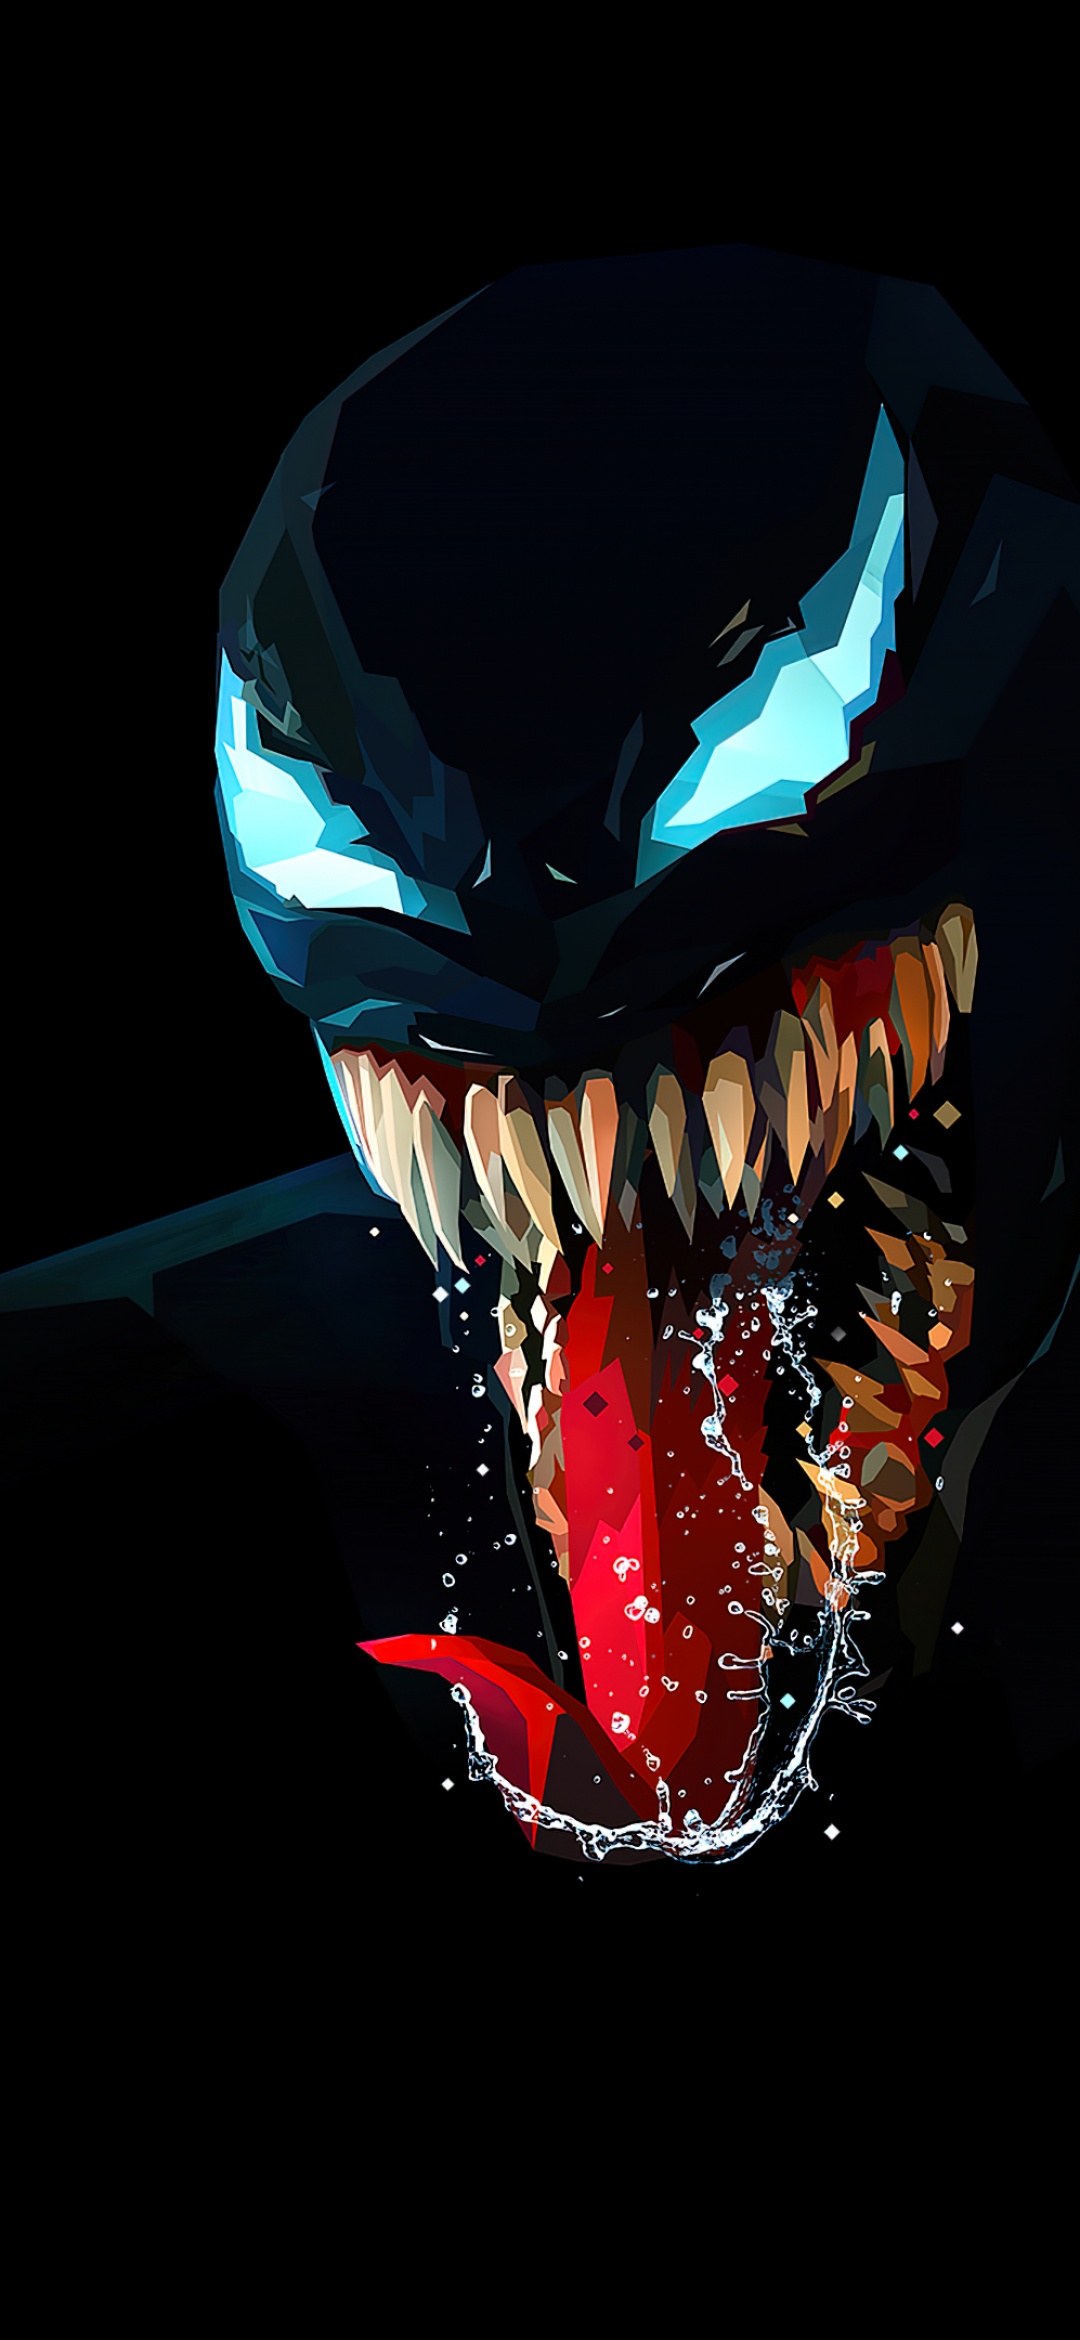 Venom Wallpaper 4K, Low poly, AMOLED, Black background, Graphics CGI, #6133